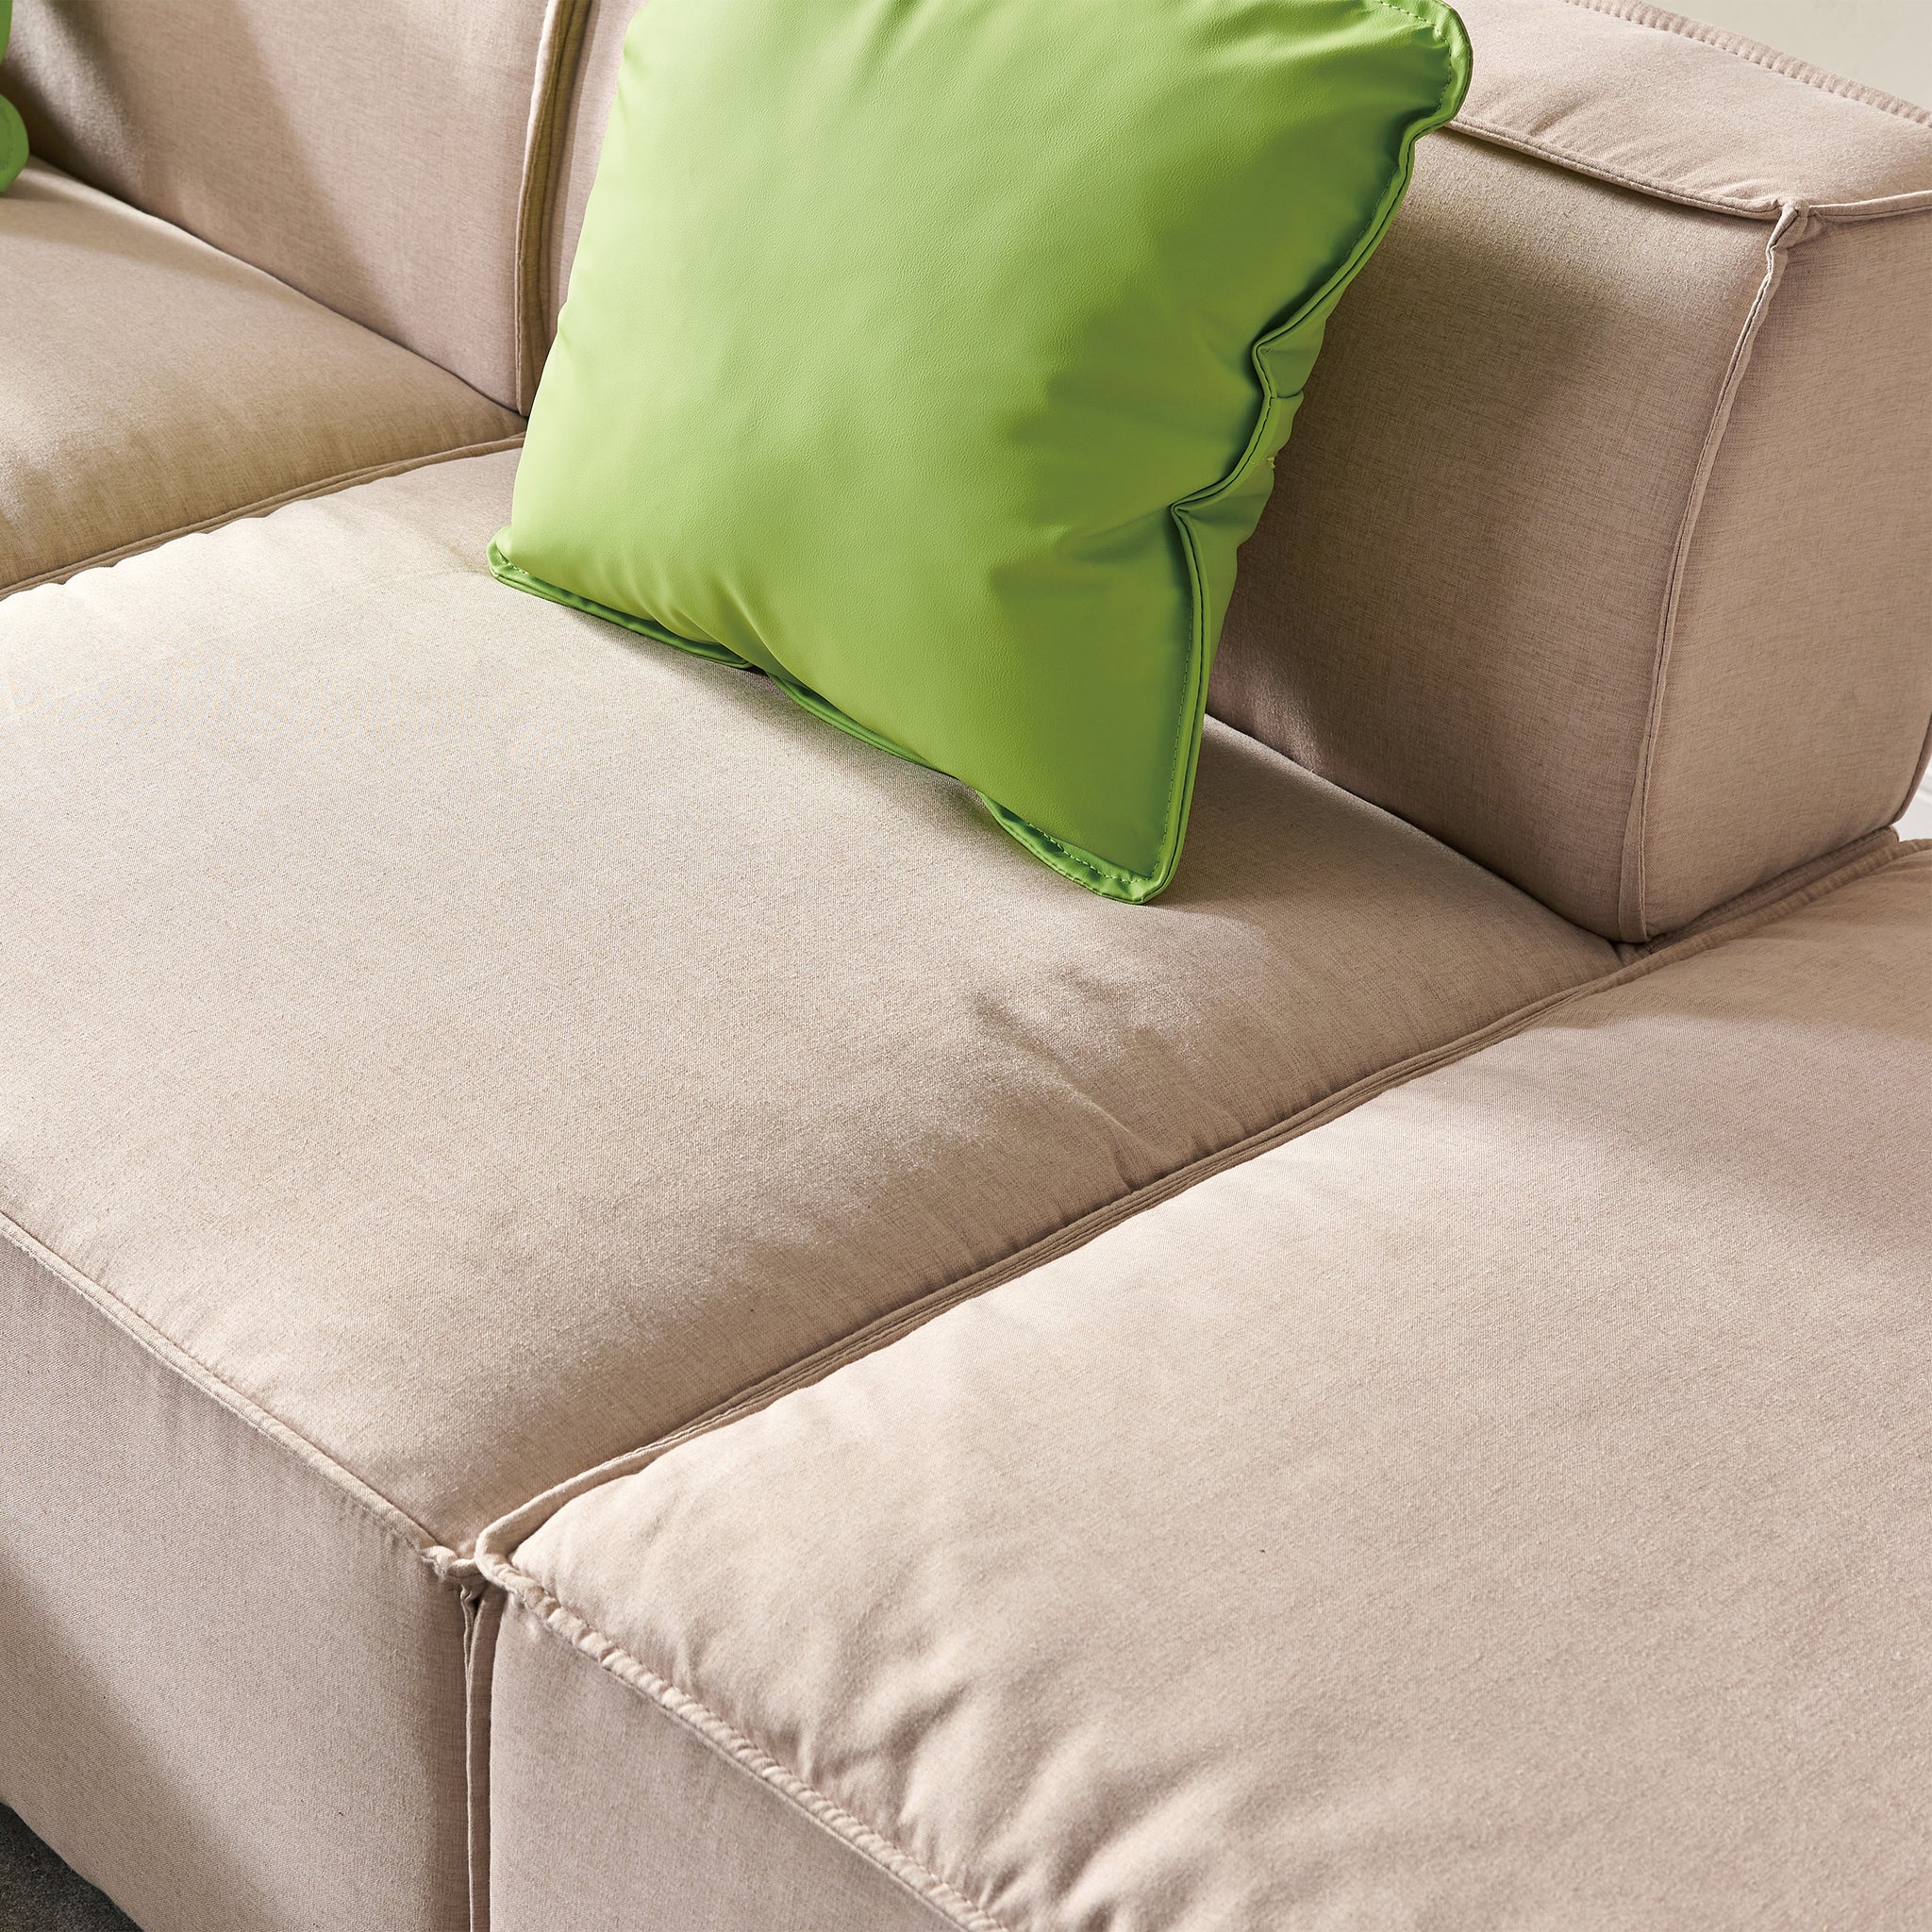 Modular Sectional Fabric Sofa Beige beige-foam-fabric